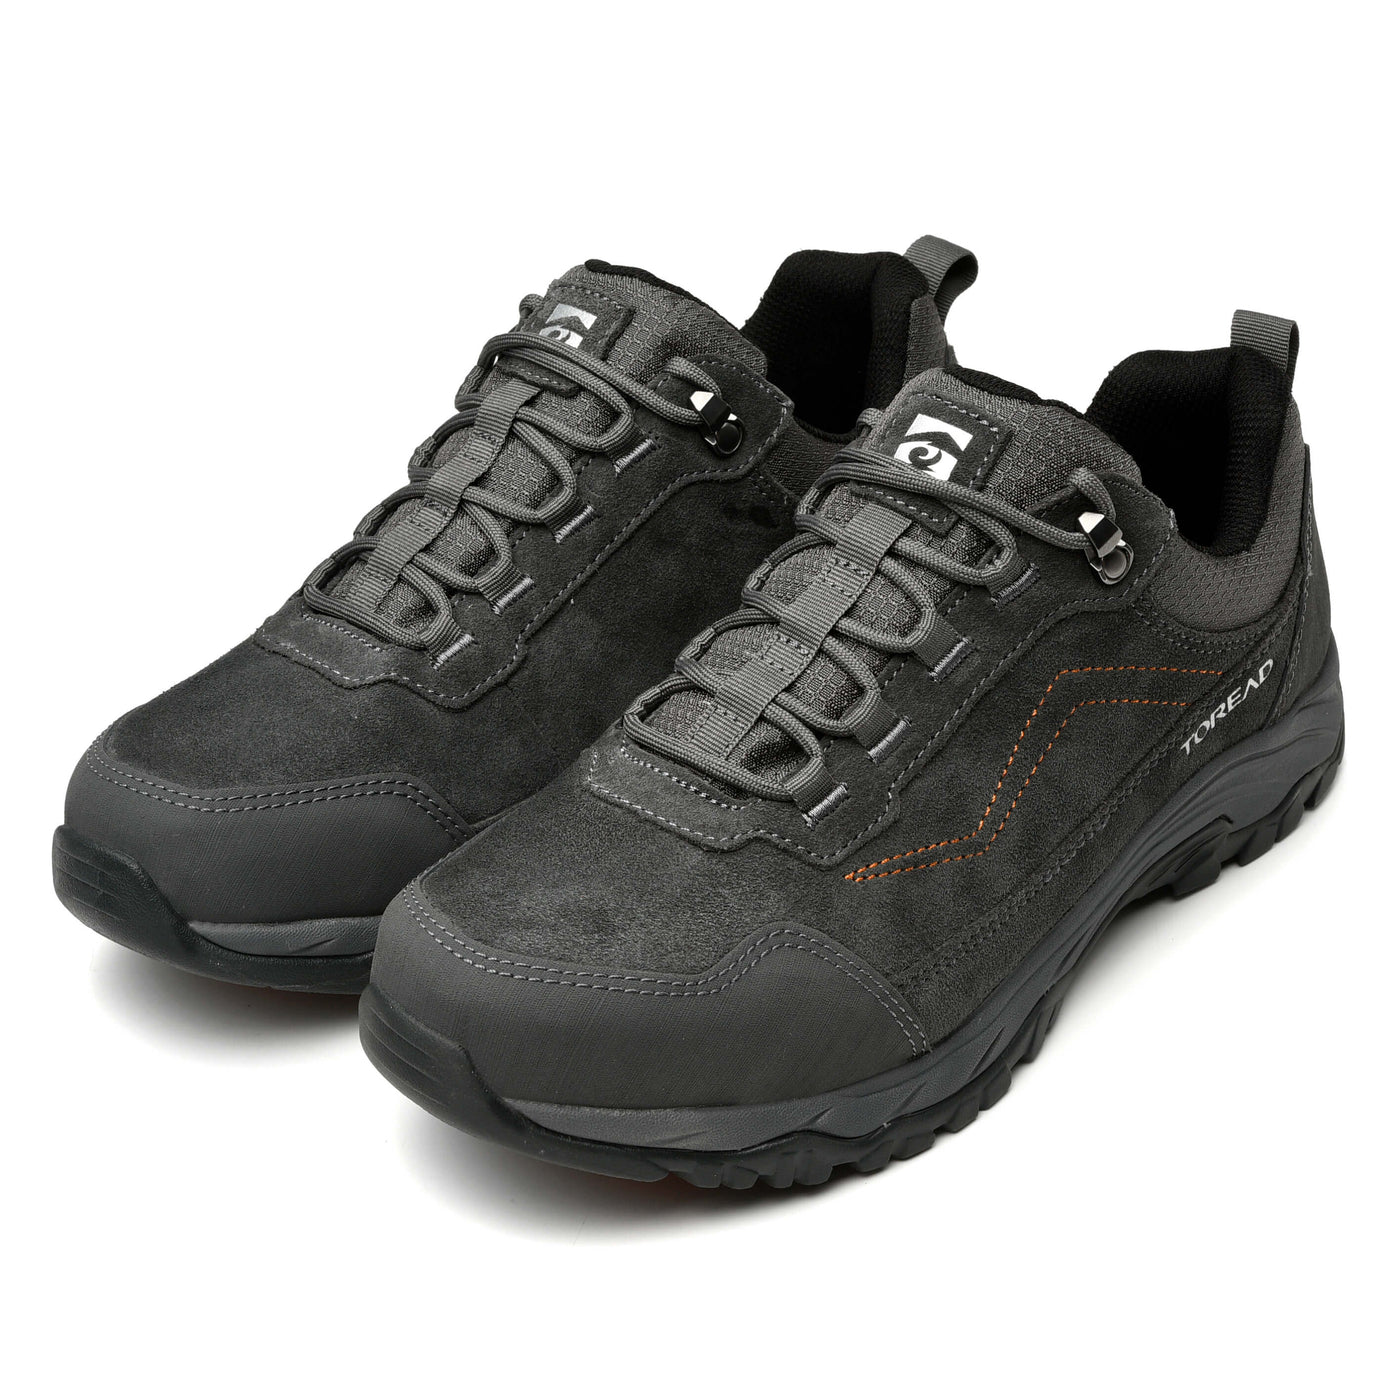 Chaussures de randonnée Tiedemann - Homme